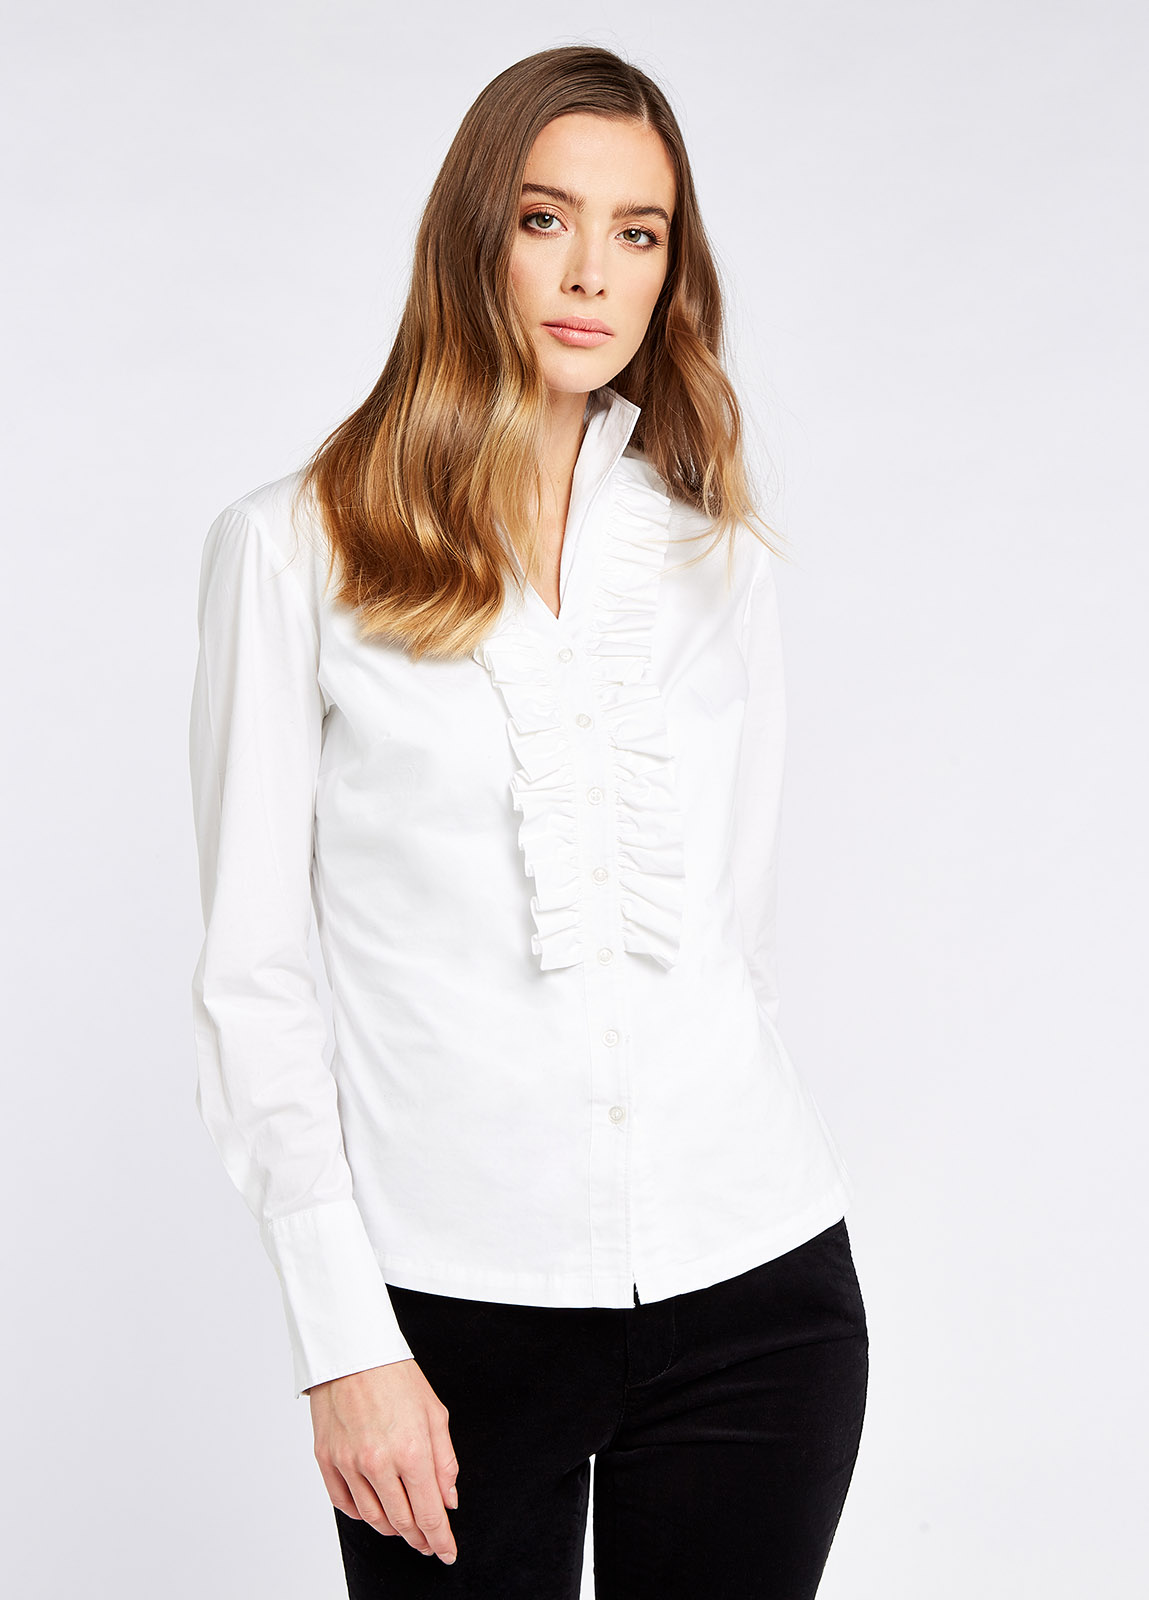 Beautifully designed Dubarry Shirts for Women | Dubarry of Ireland - USA